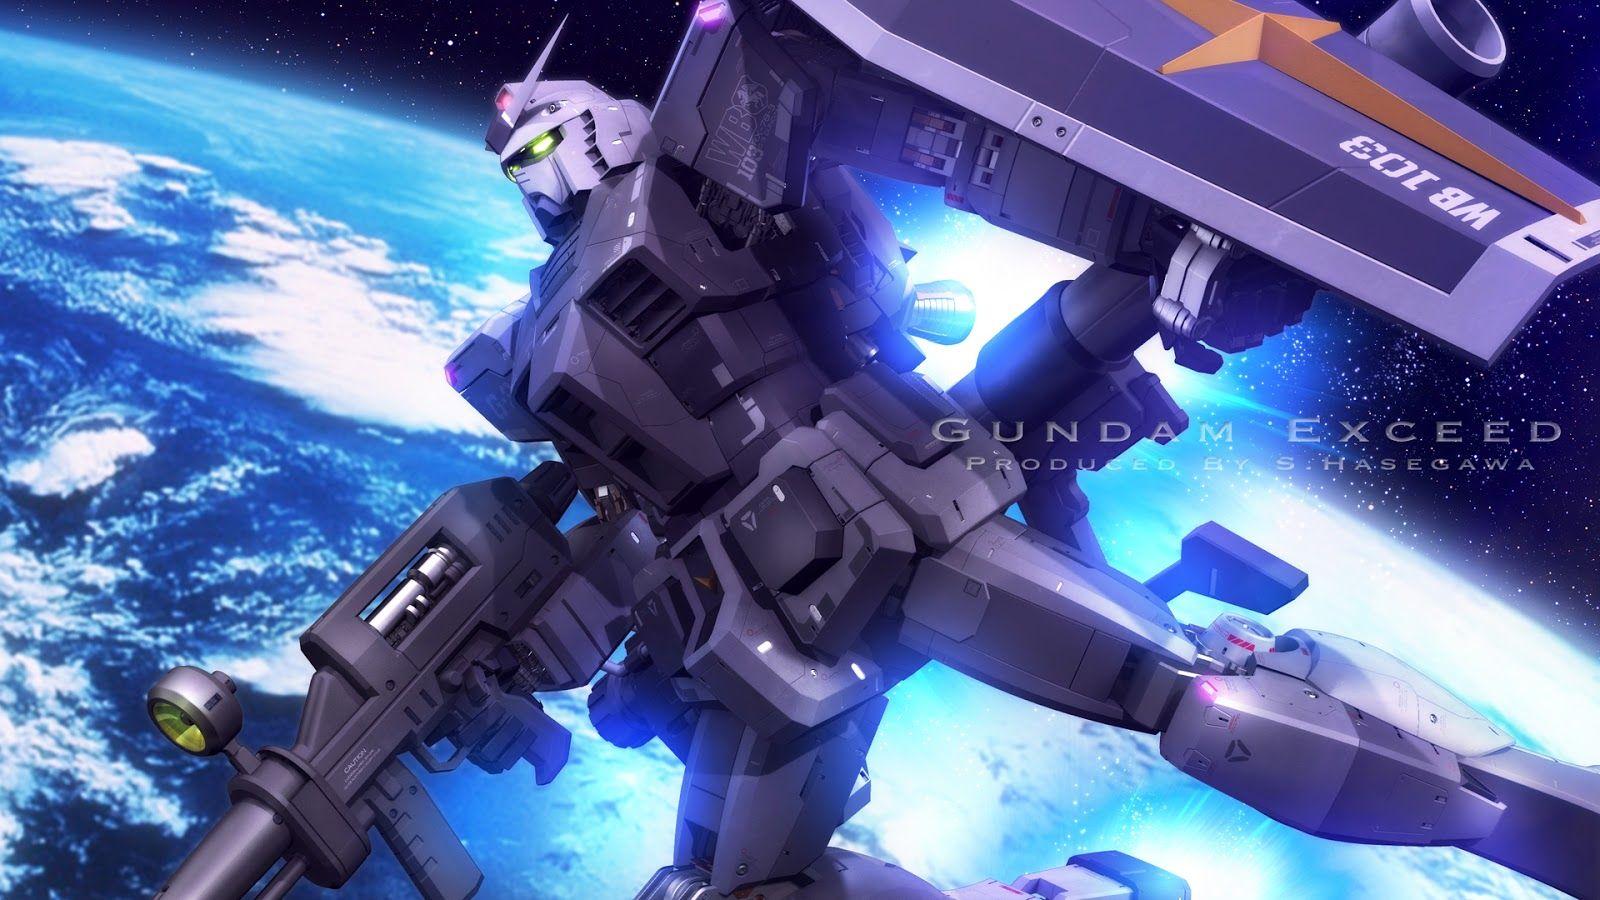 GUNDAM GUY: Awesome Gundam Digital Artworks [Updated 8 7 16]